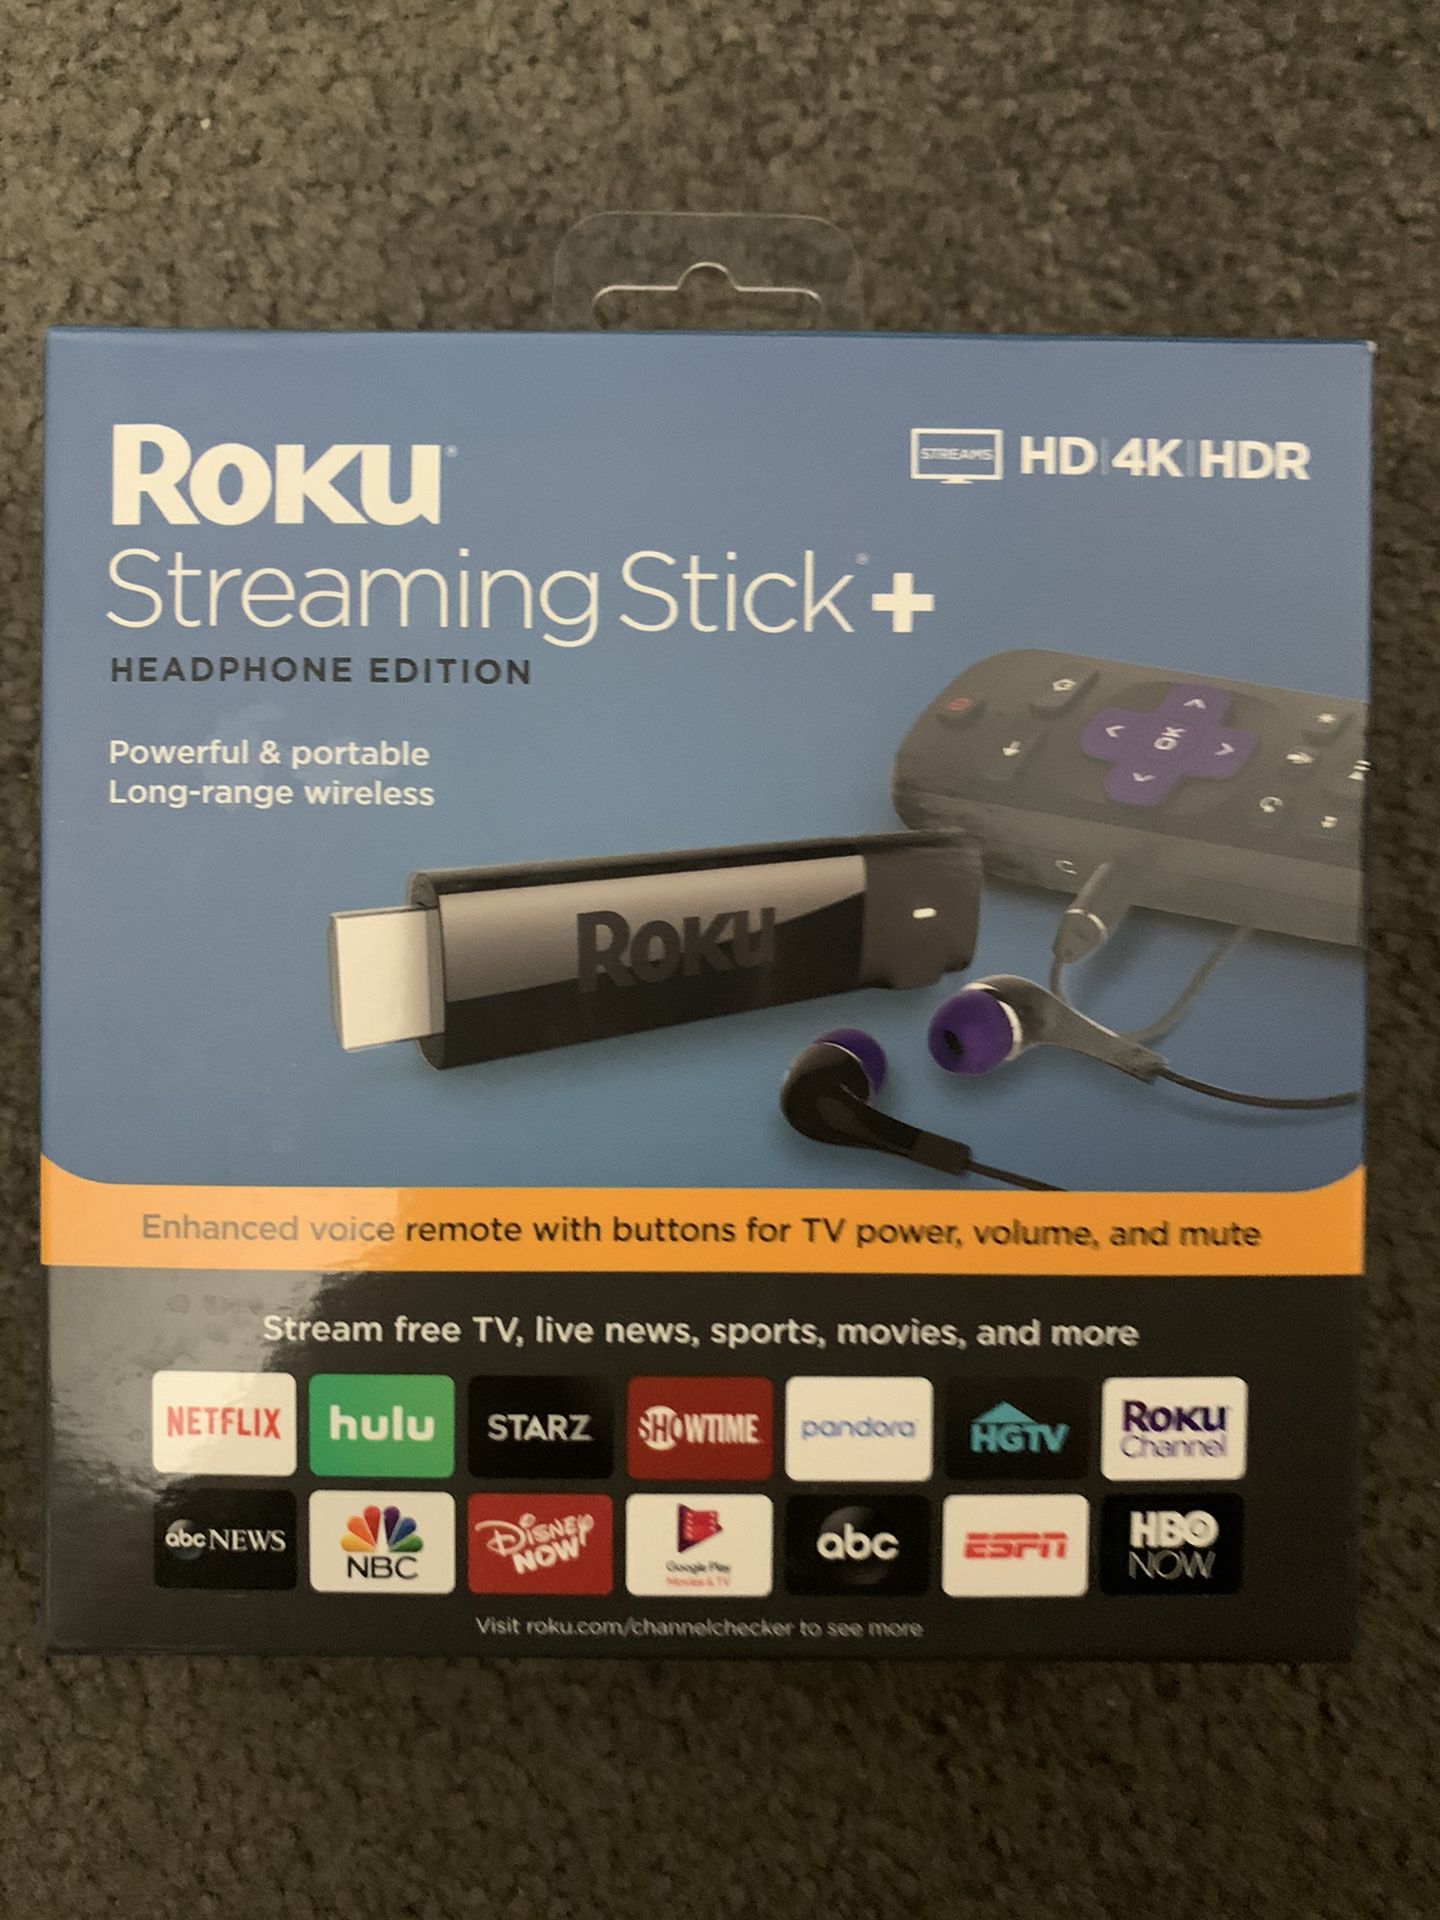 Roku StreamingStick+ HD 4K HDR